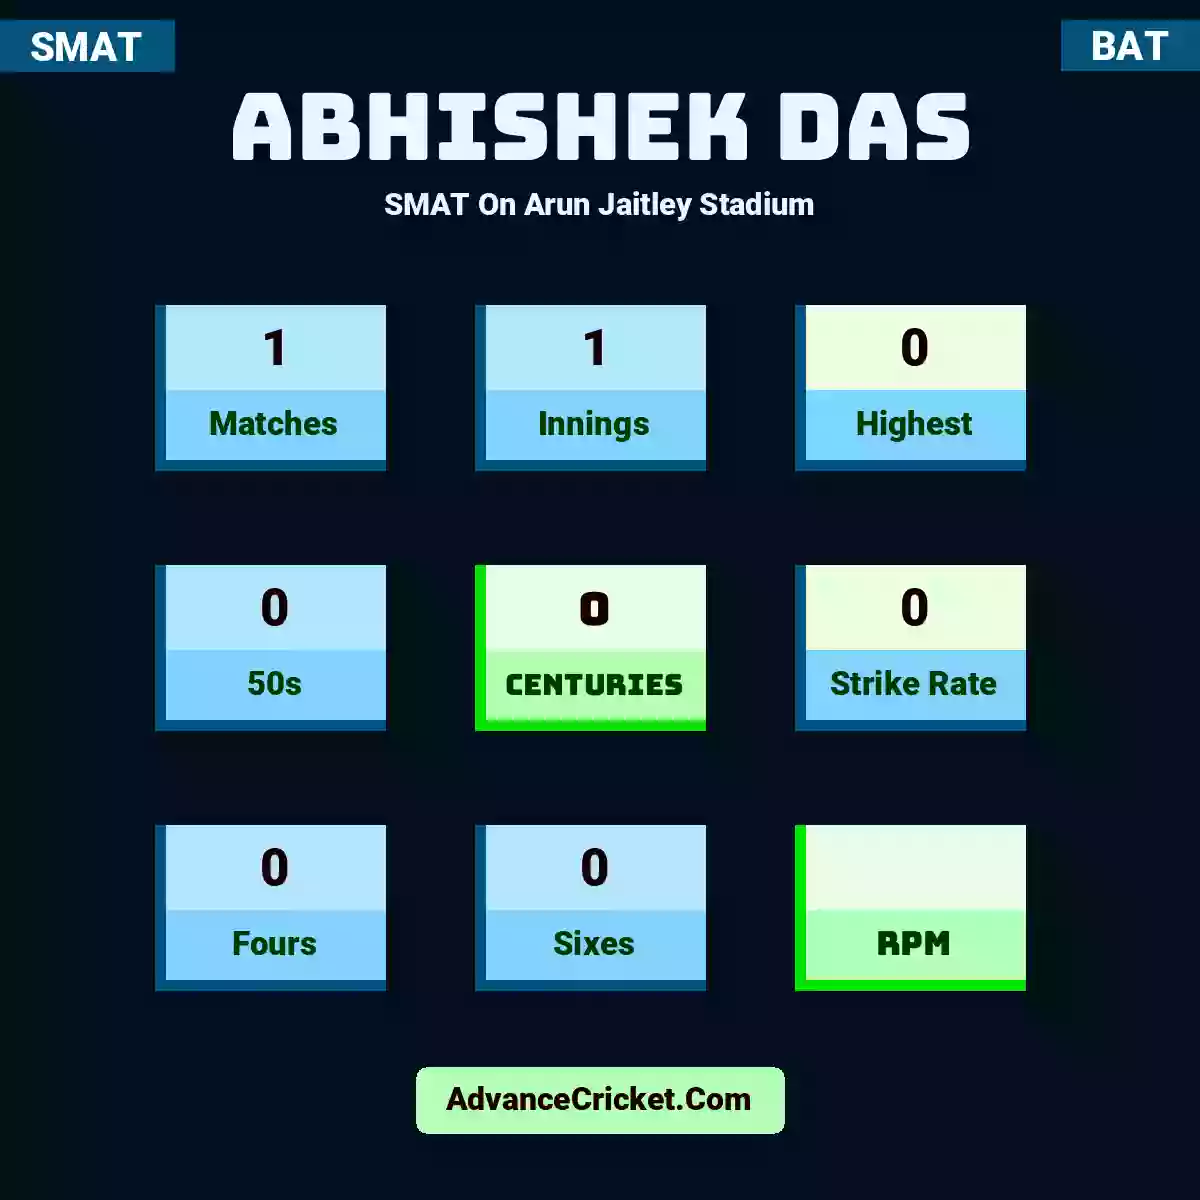 Abhishek Das SMAT  On Arun Jaitley Stadium, Abhishek Das played 1 matches, scored 0 runs as highest, 0 half-centuries, and 0 centuries, with a strike rate of 0. A.Das hit 0 fours and 0 sixes.